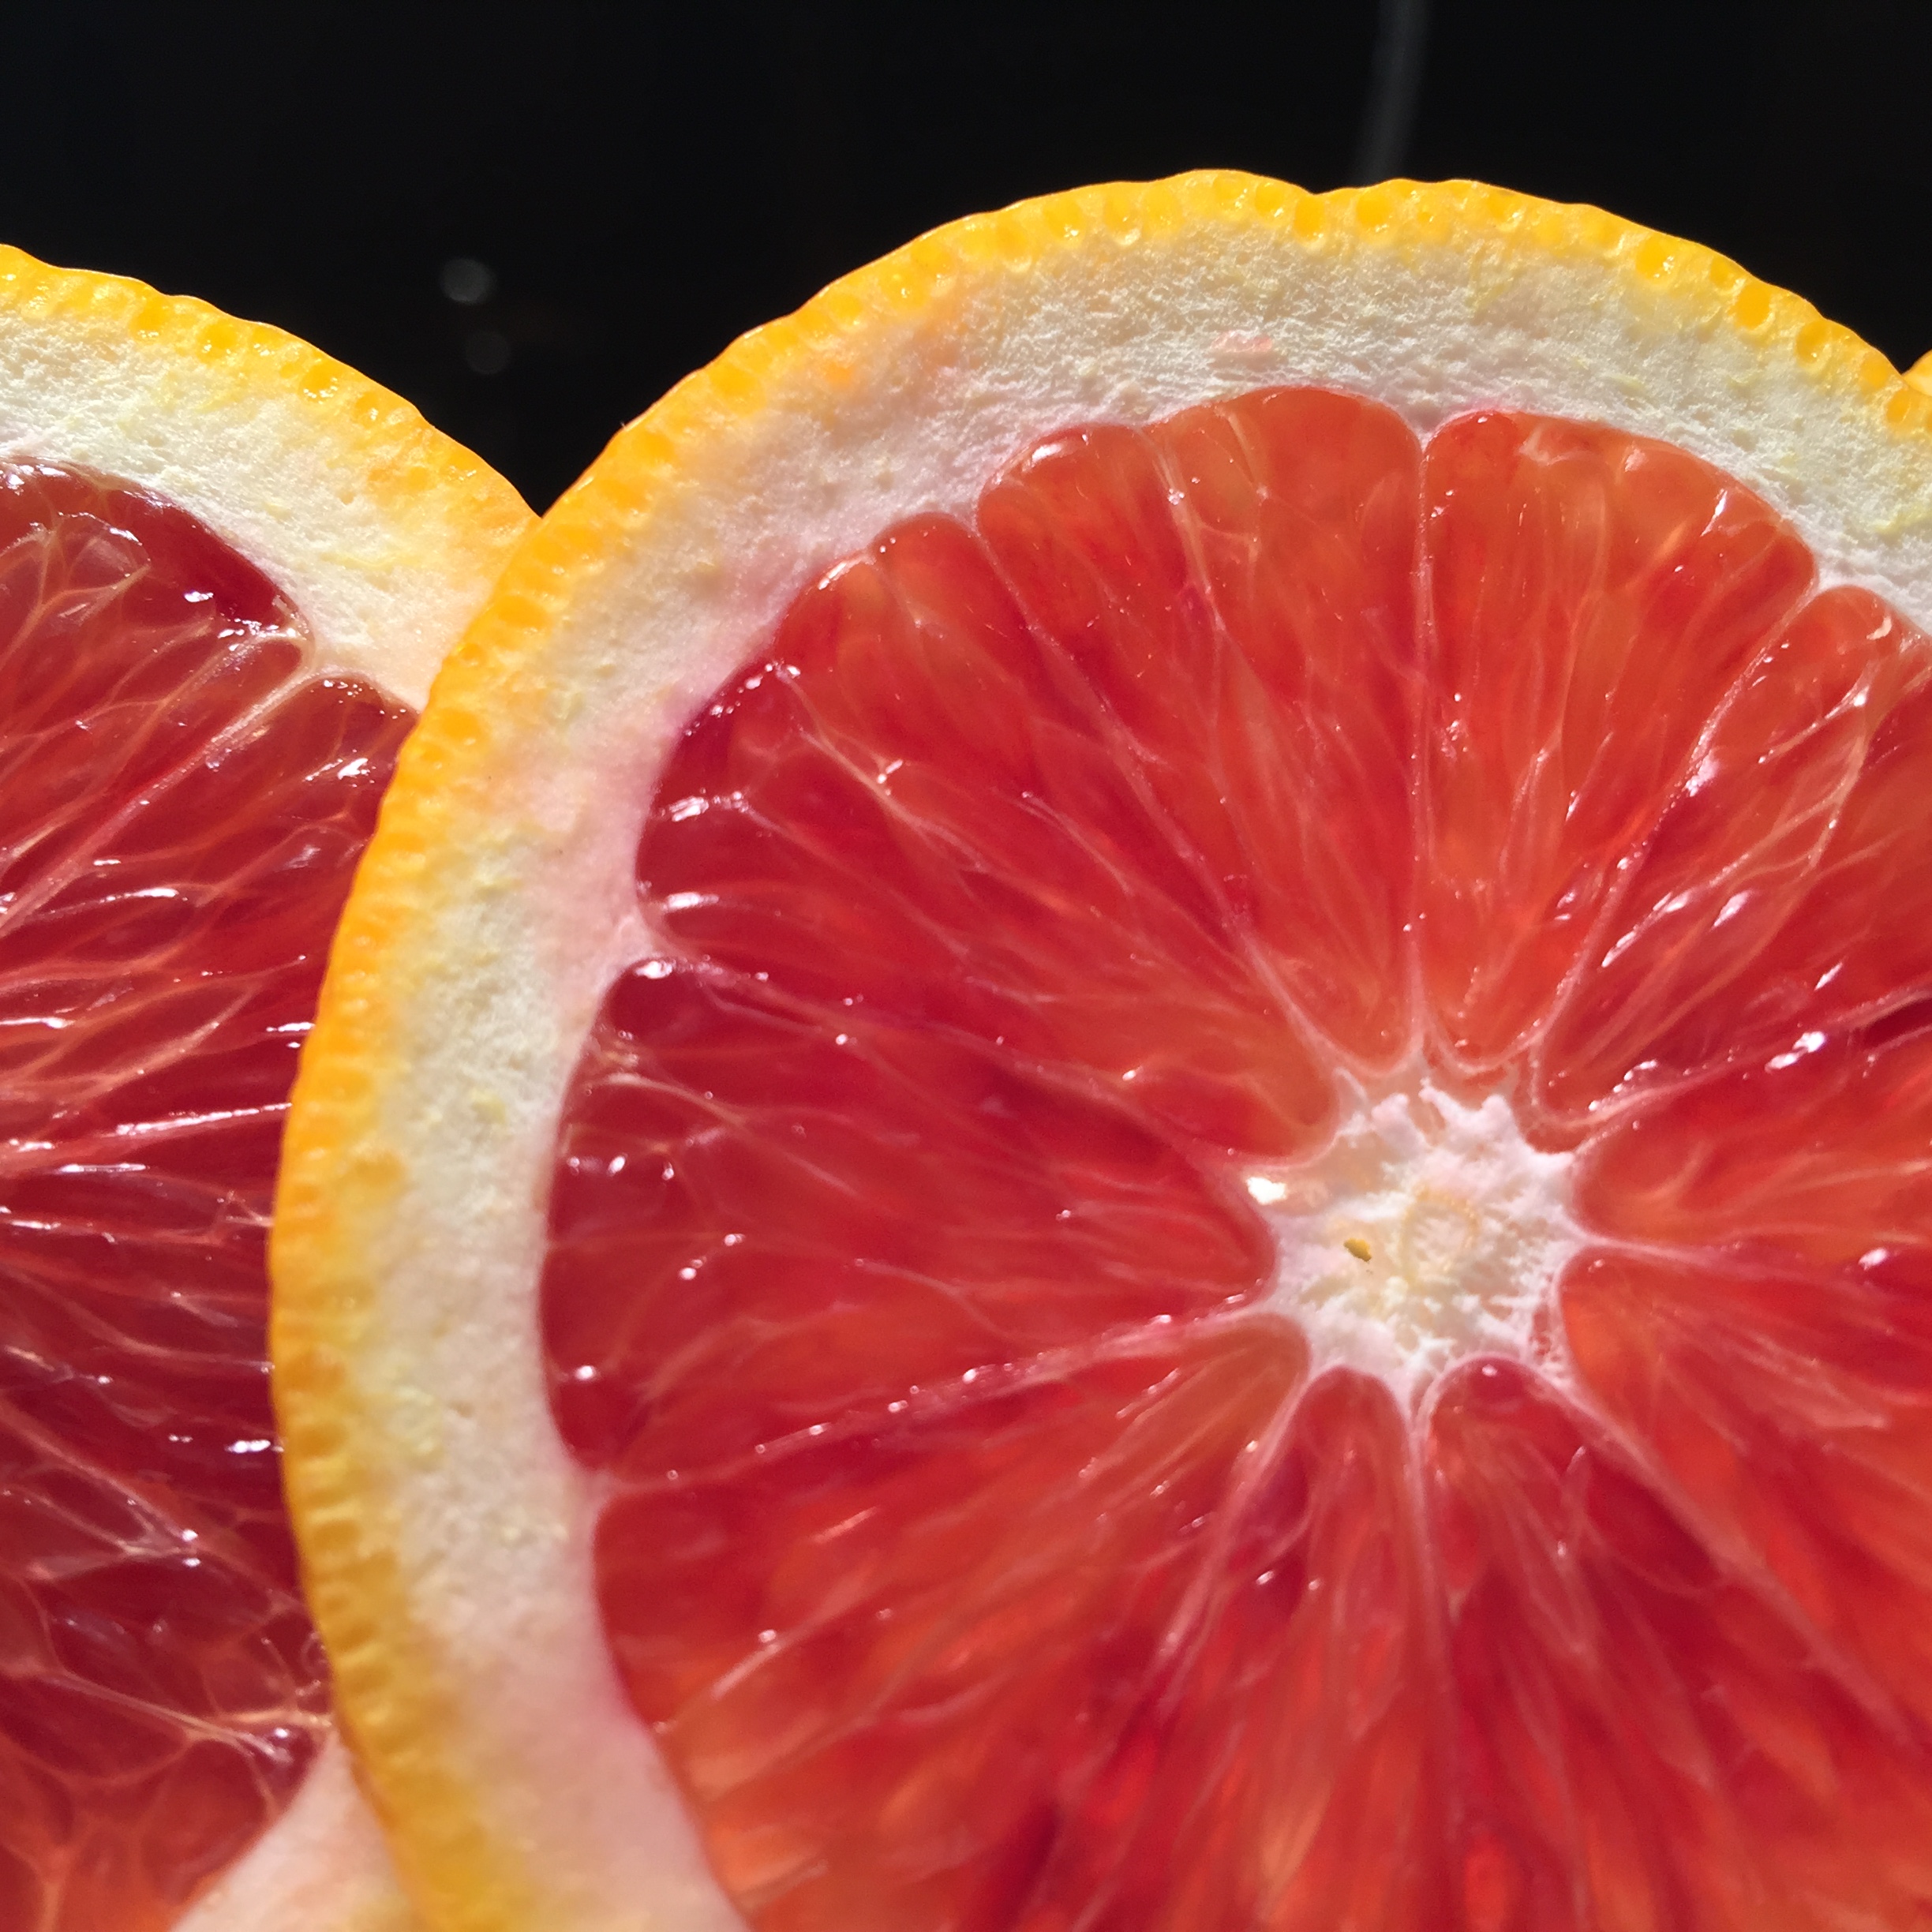 winter citrus: ruby red grapefruit